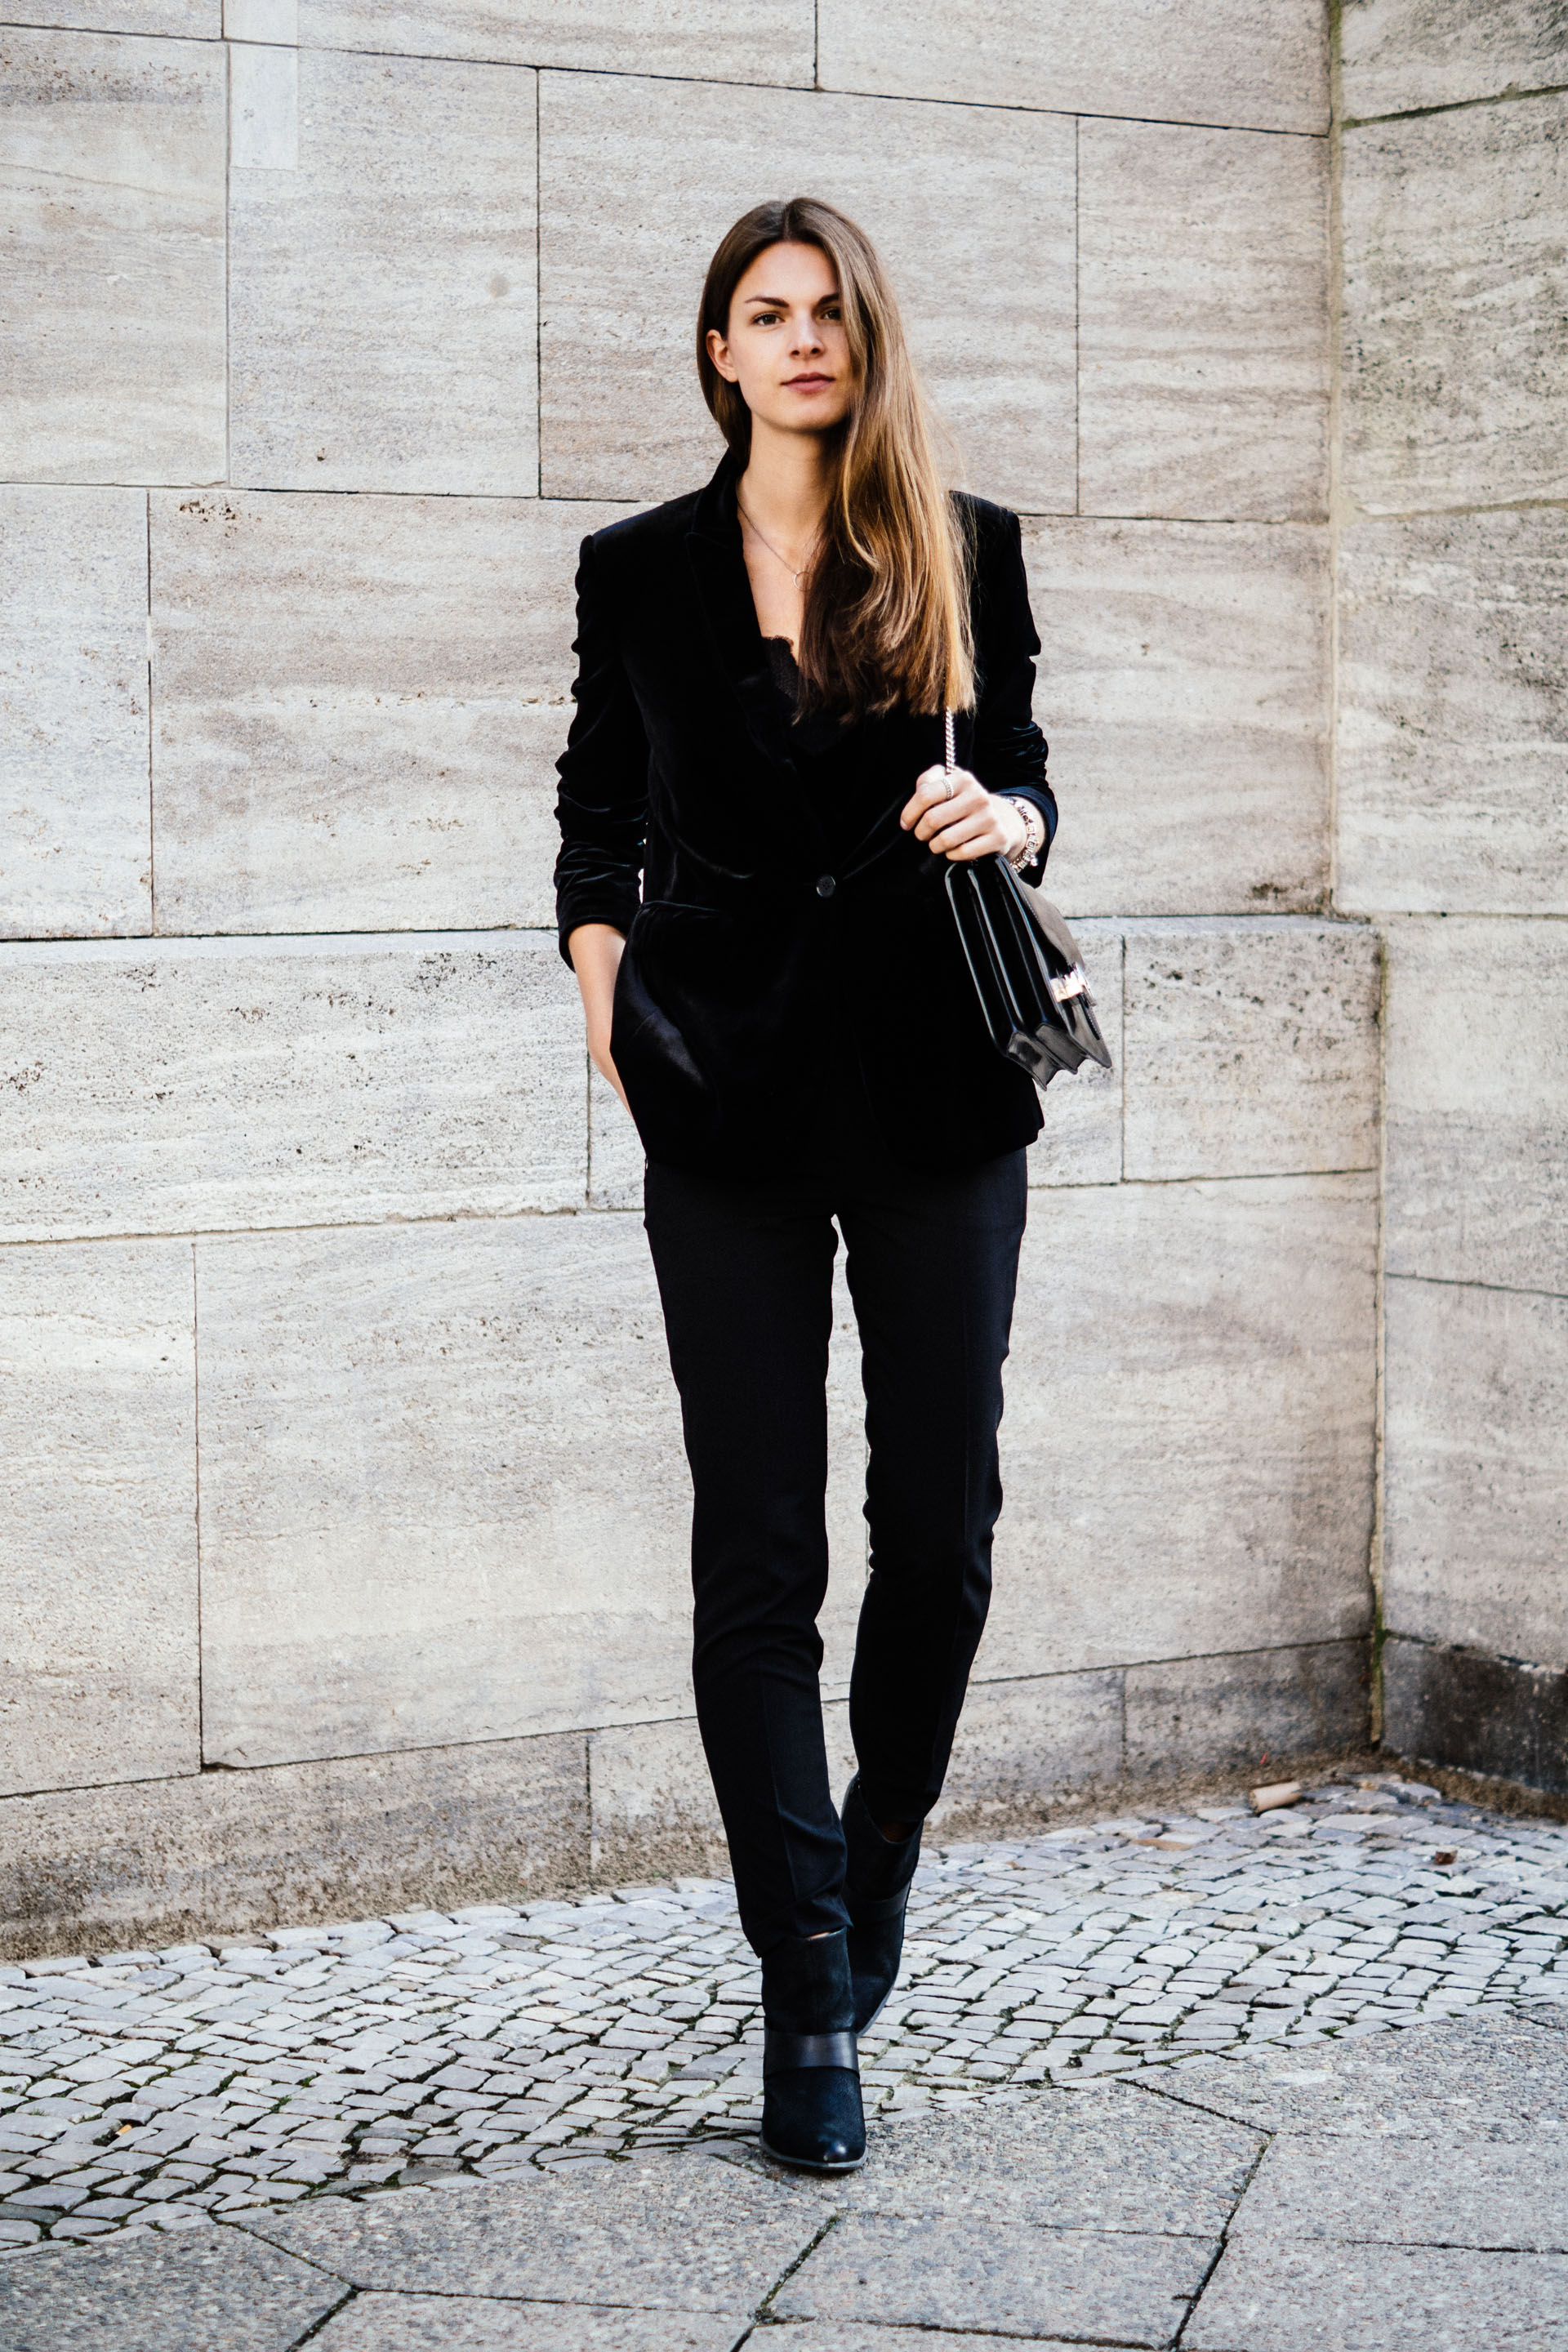 Jake*s Fashion Week Outfit || Velvet Blazer and black pants